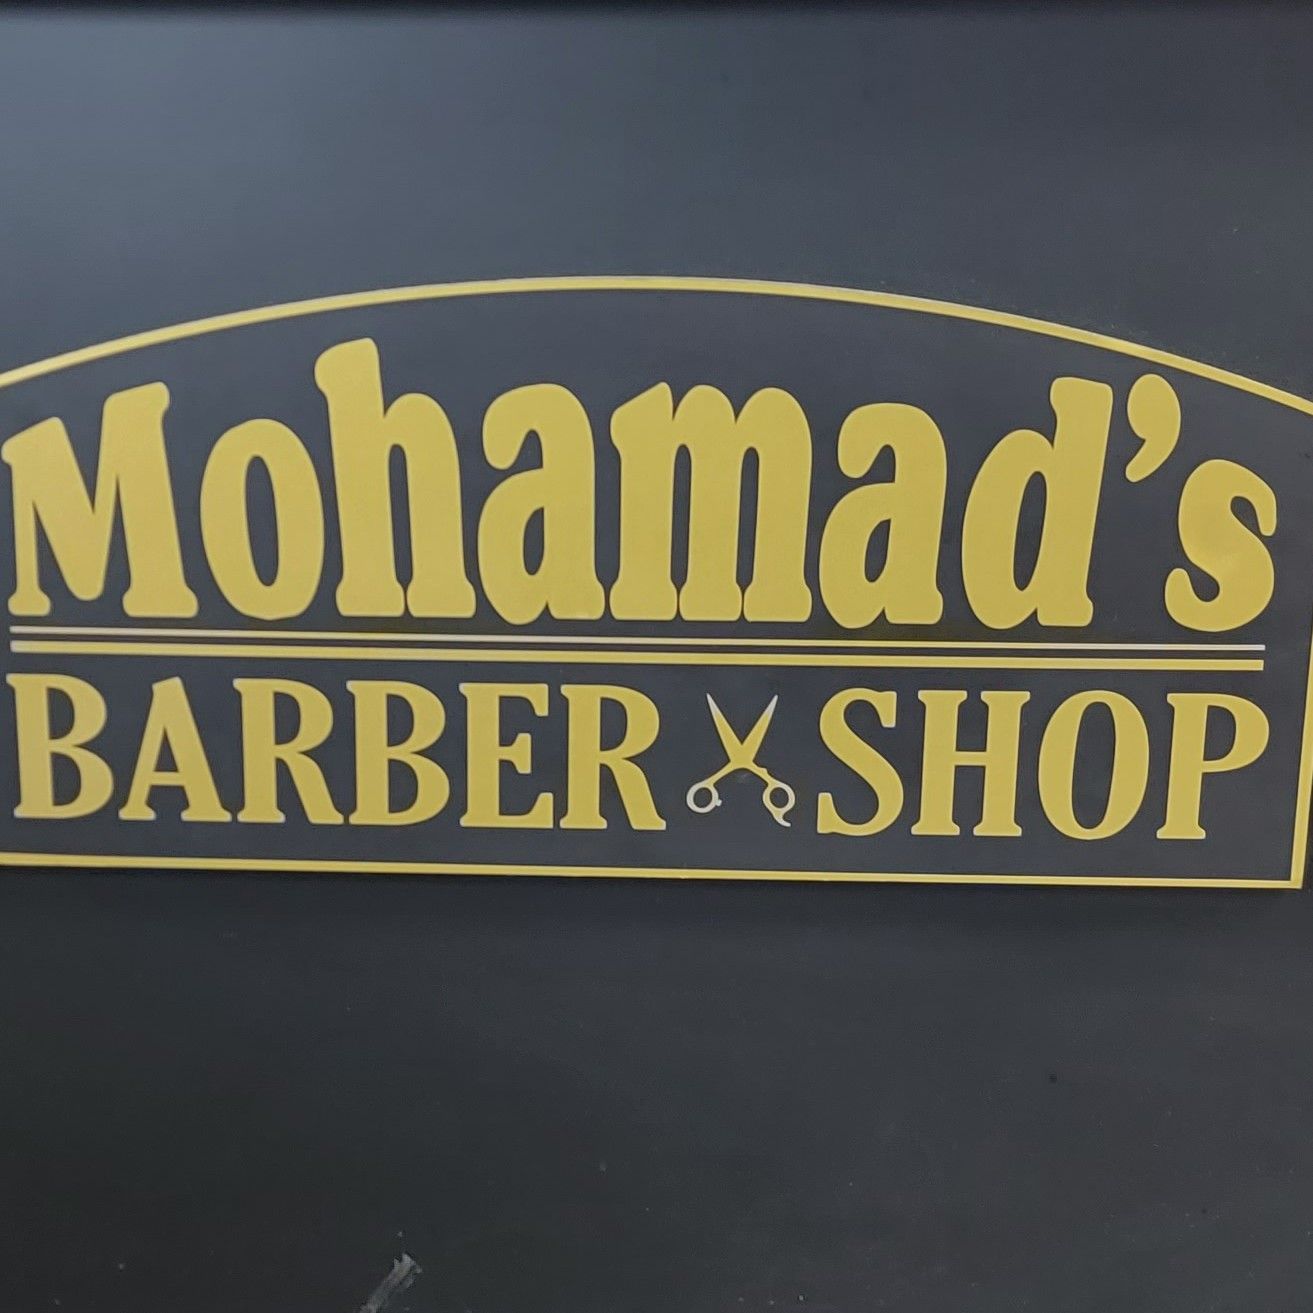 Mohamads Barbershop Waterloo, 425 University Ave E, N2K 4C9, Waterloo